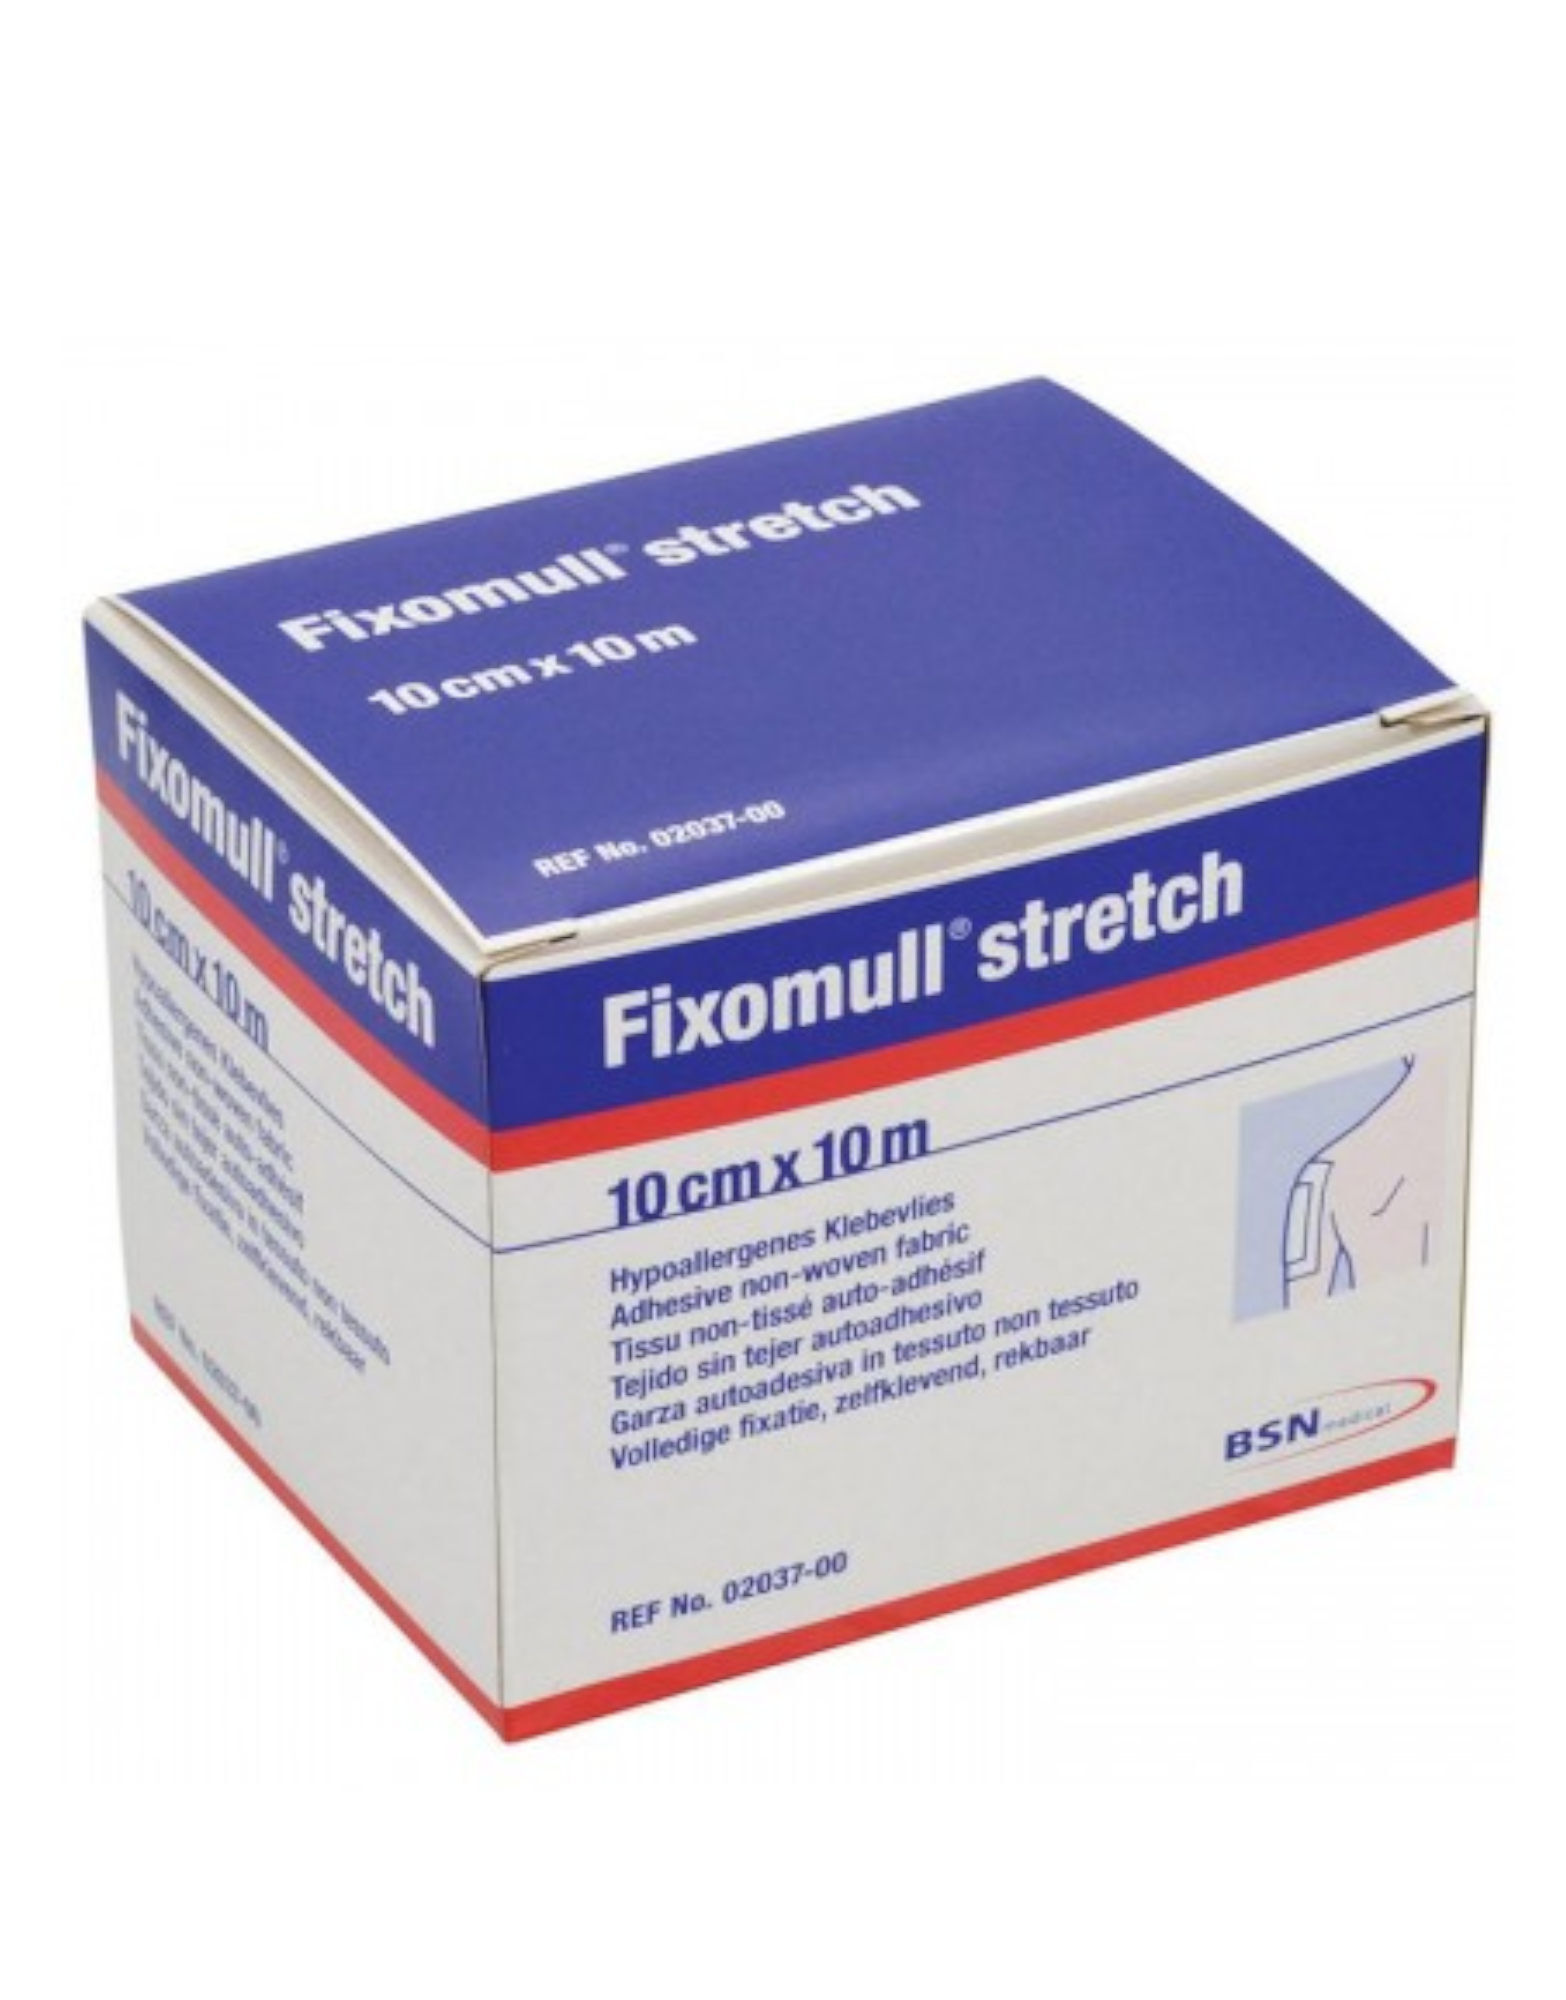 BSN MEDICAL Fixomull Stretch 1 Garza 10cmx10m